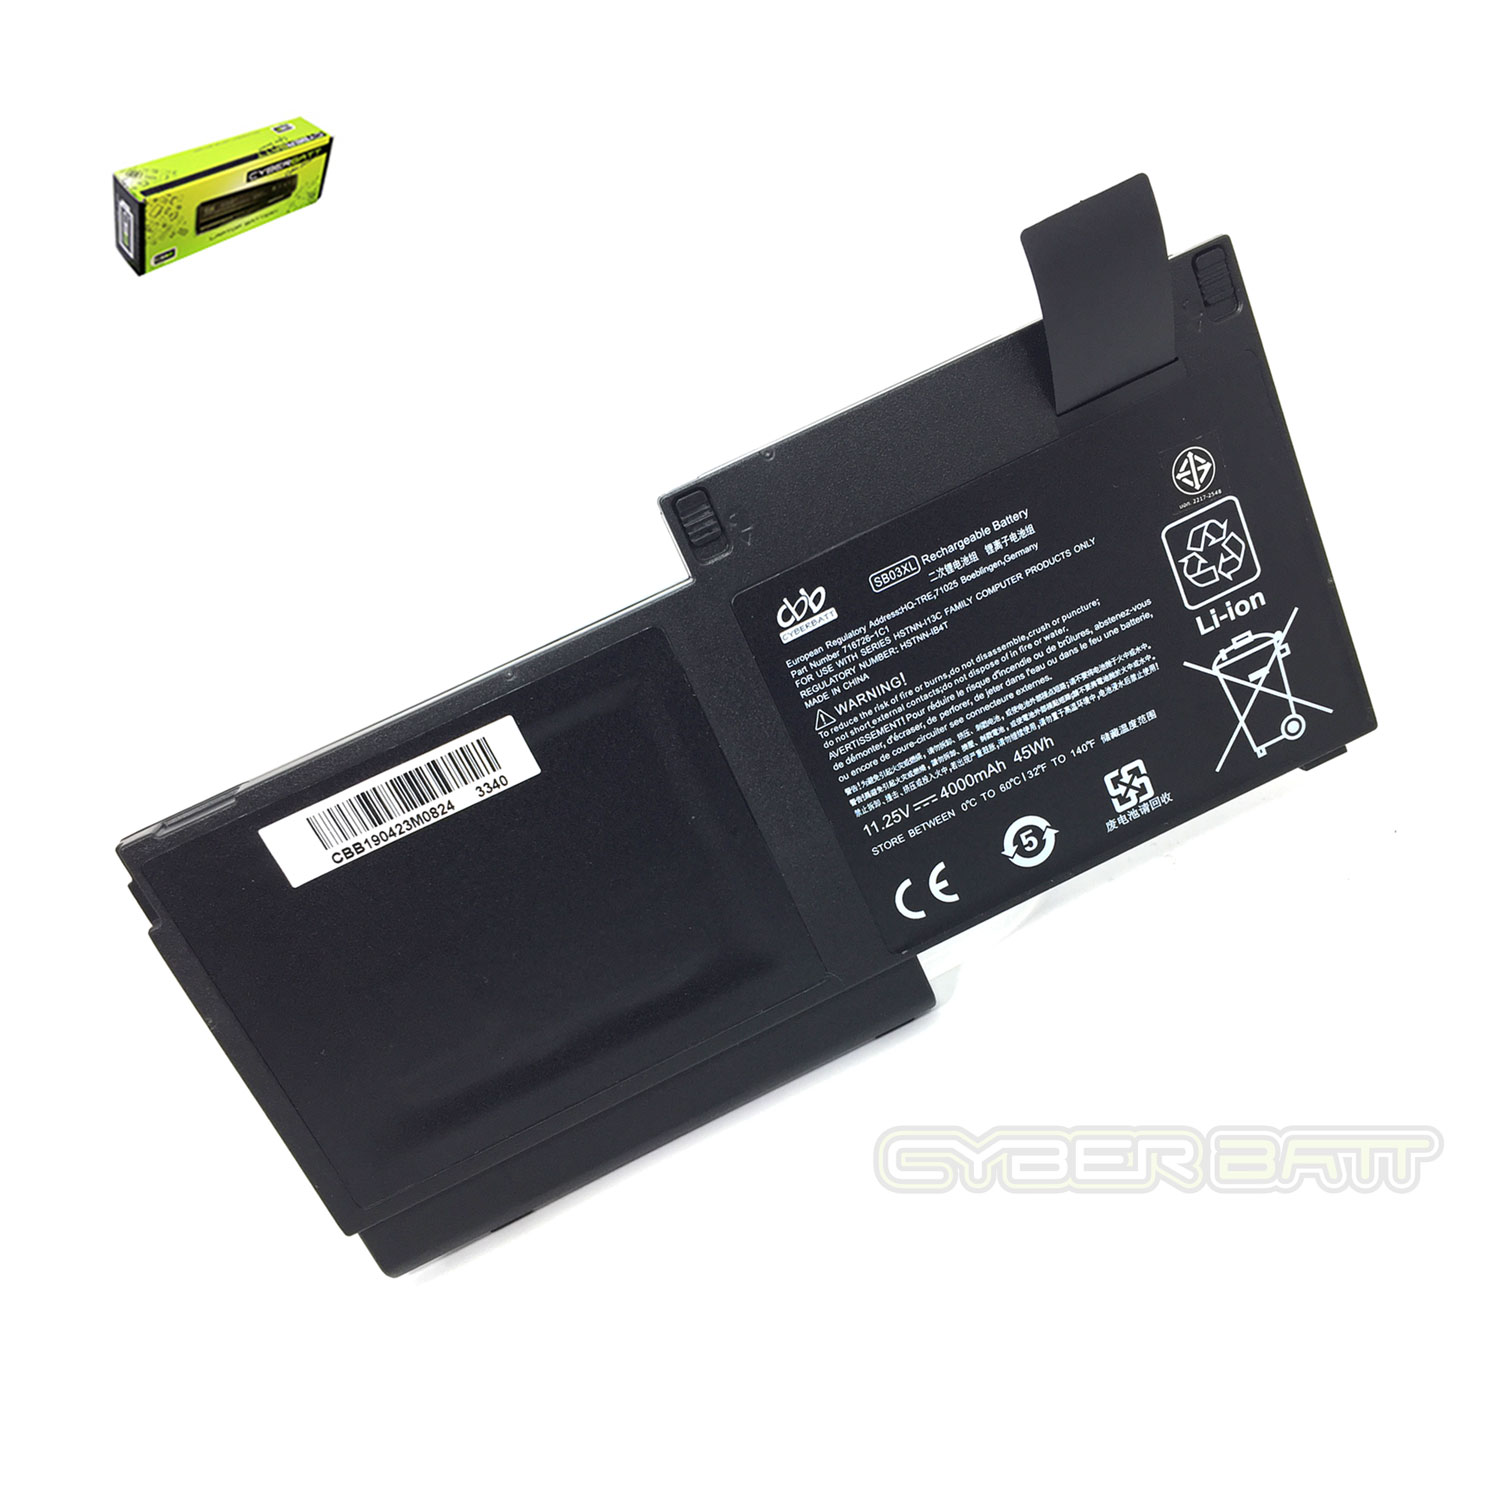 Battery HP EliteBook 725 G1 SB03-3S1P : 11.4V-46.5W Black (CBB)